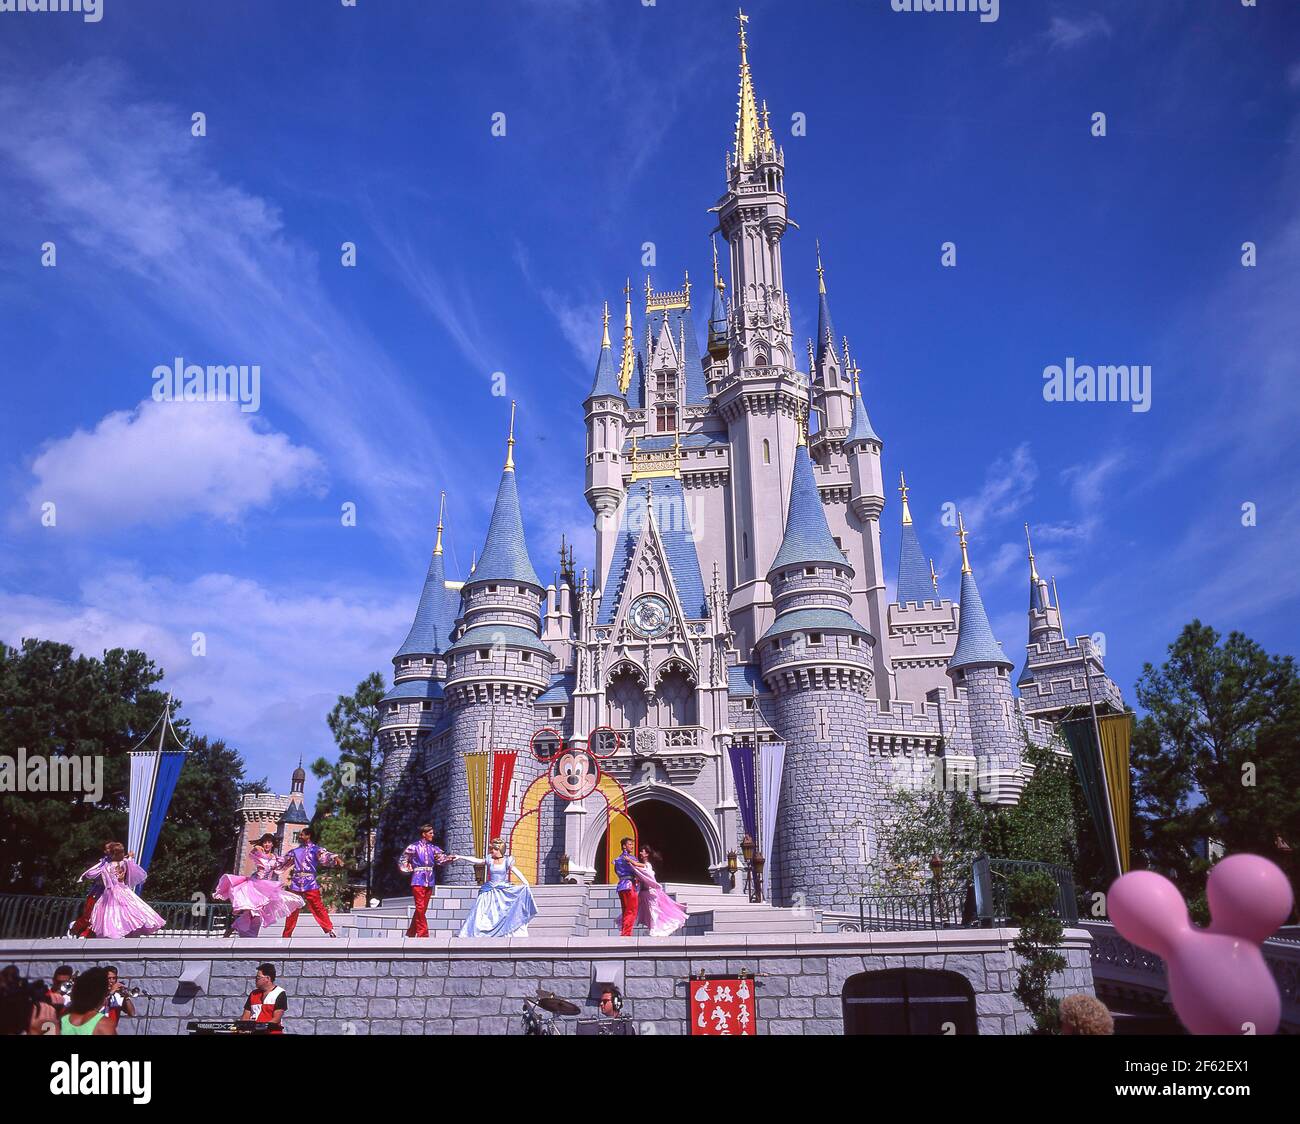 Disney Show, Cinderella's Castle, Magic Kingdom, Walt Disney World, Orlando, Florida, United States of America Stock Photo